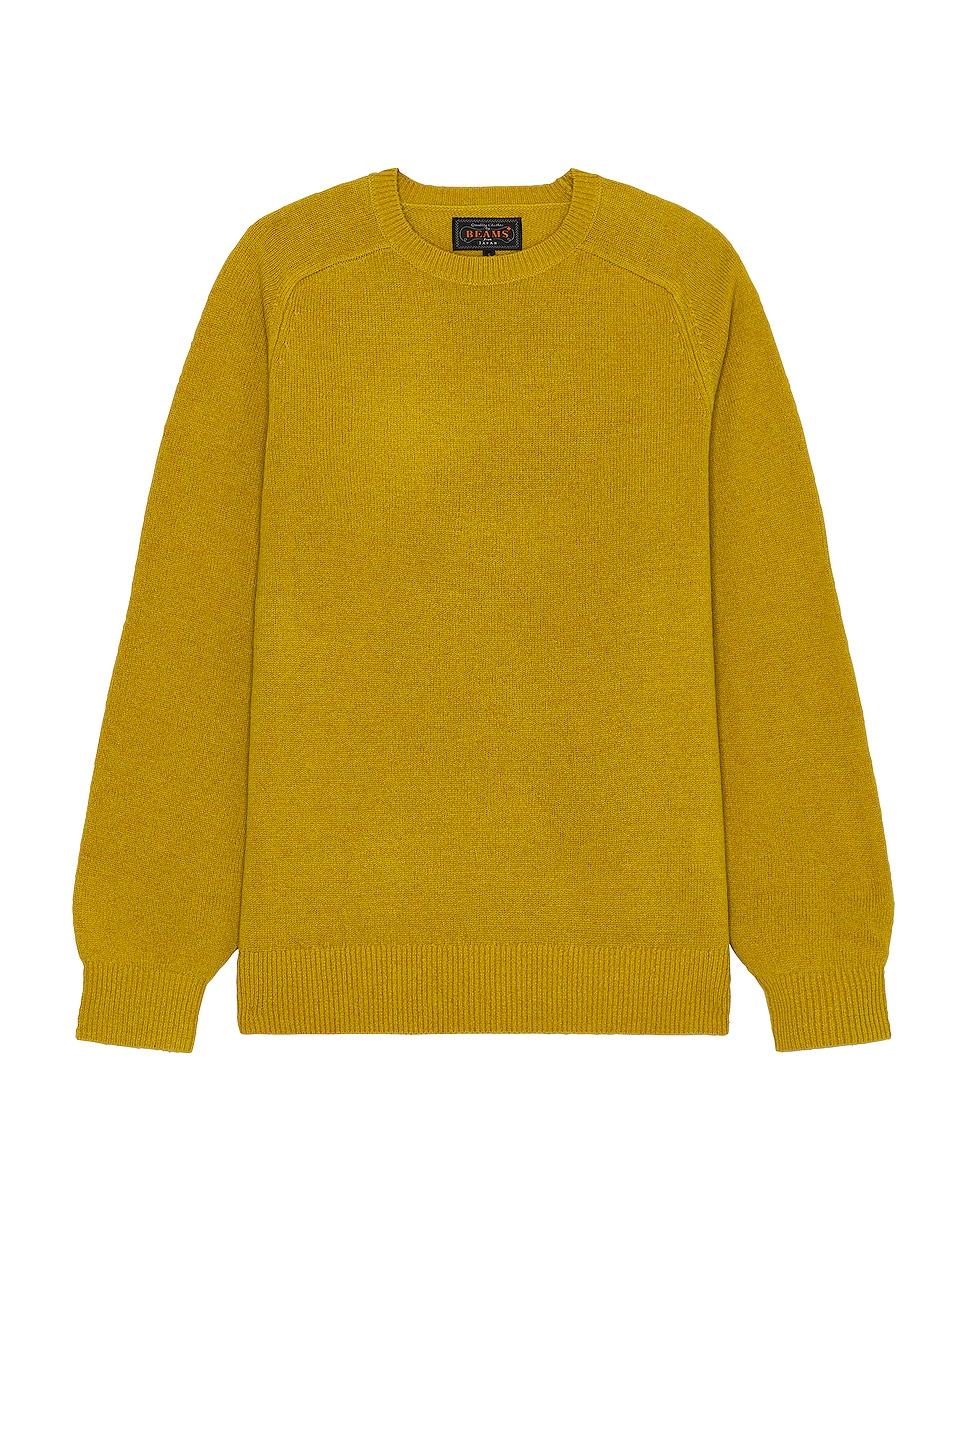 Image 1 of Beams Plus Sweater in Mustard